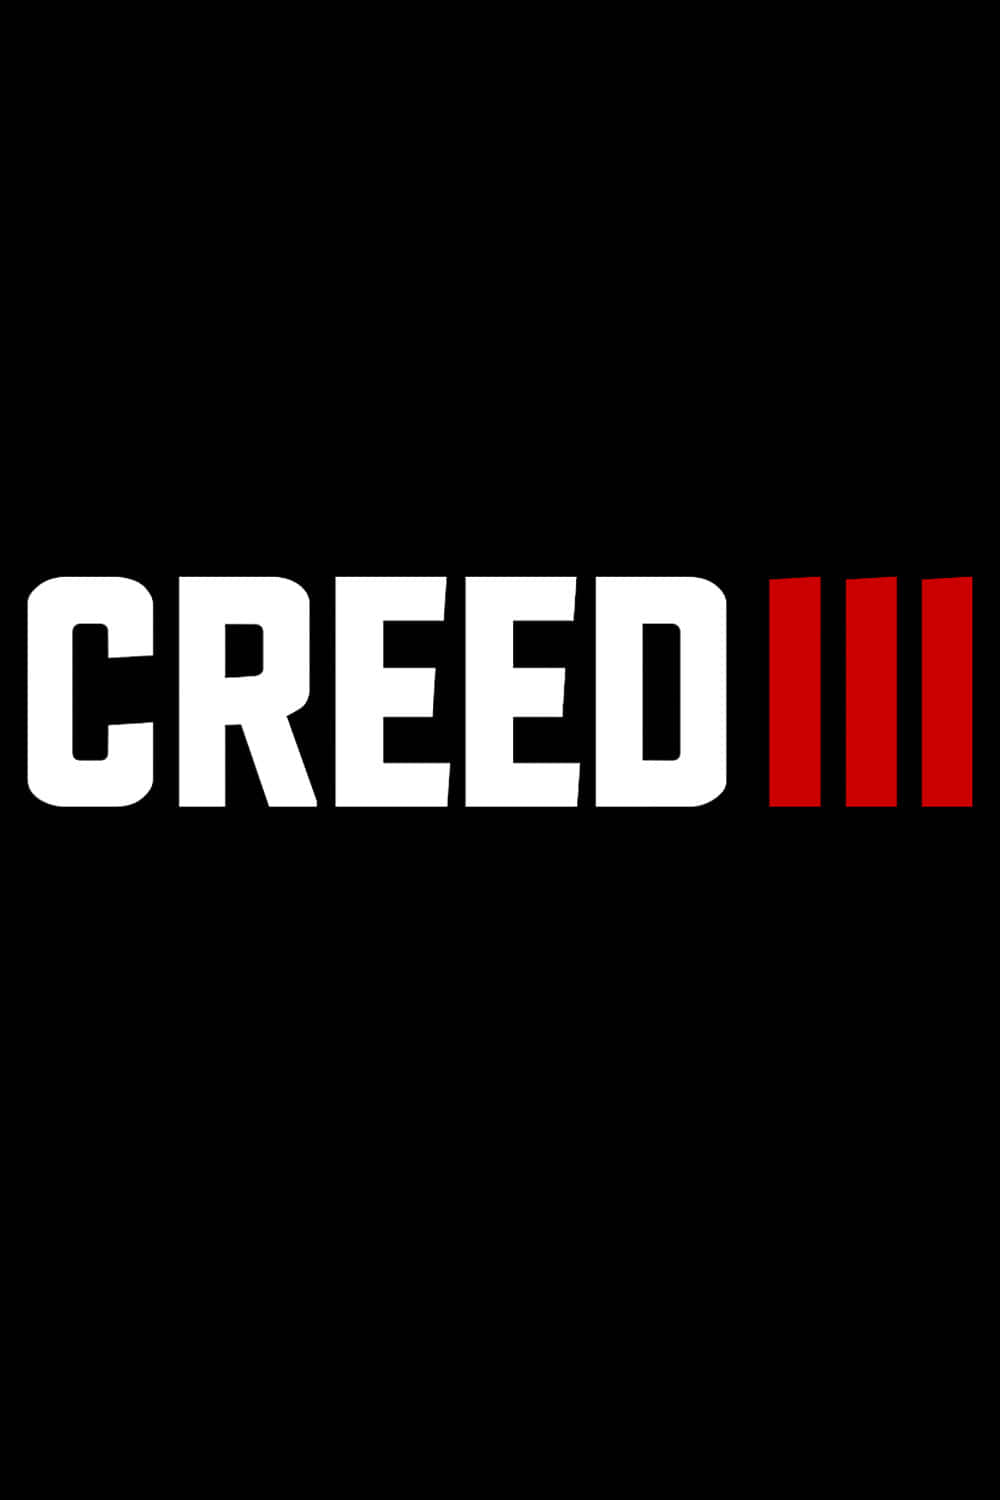 Creed 3 Wallpaper